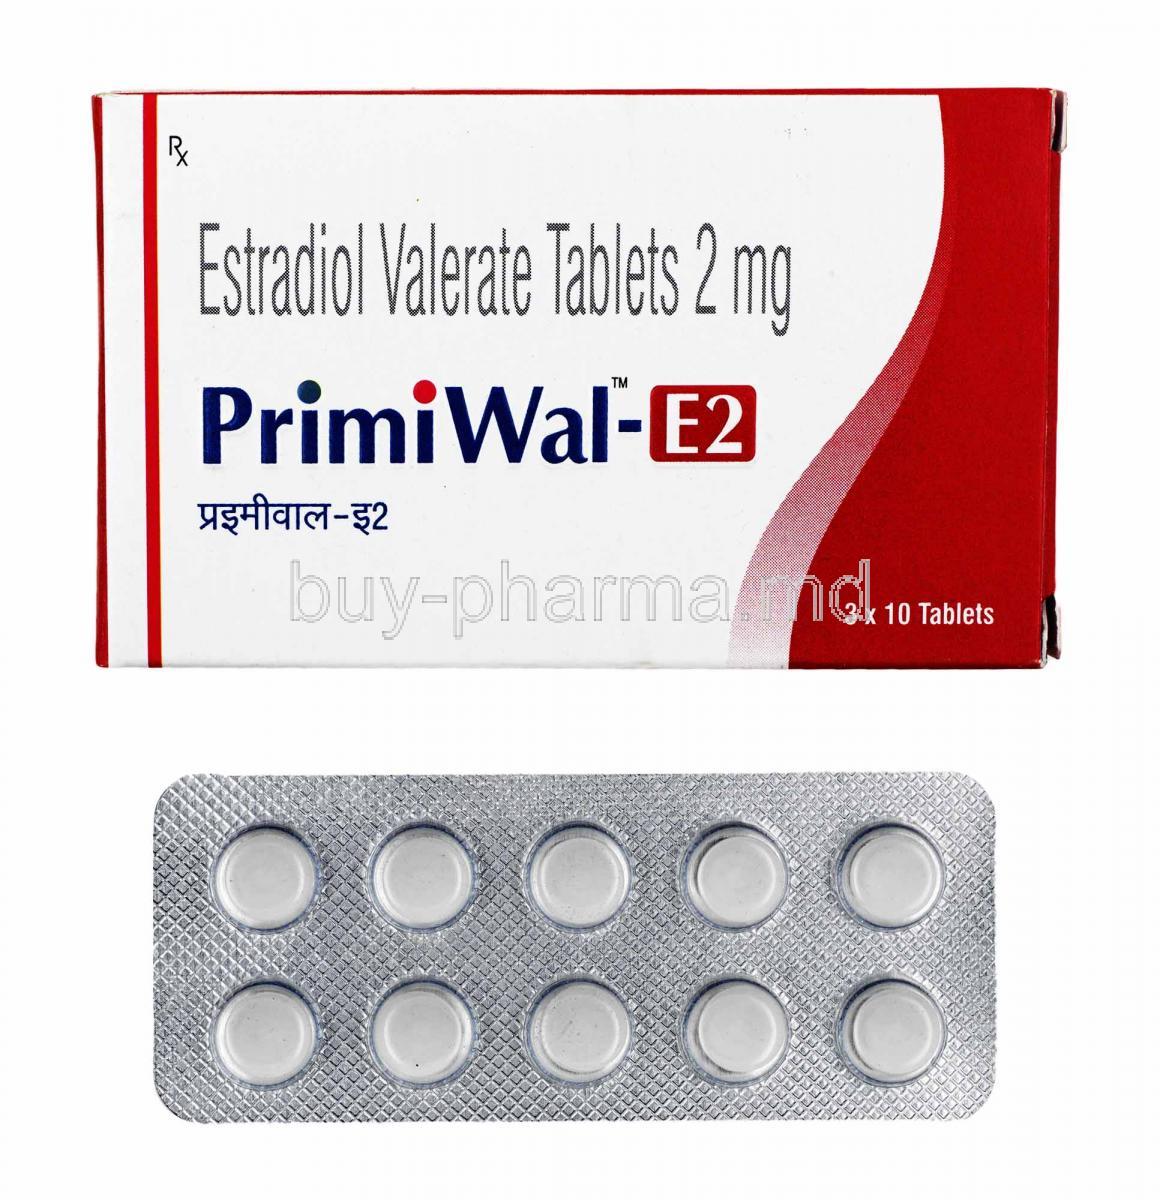 Primiwal E, Estradiol 2mg box and tablets